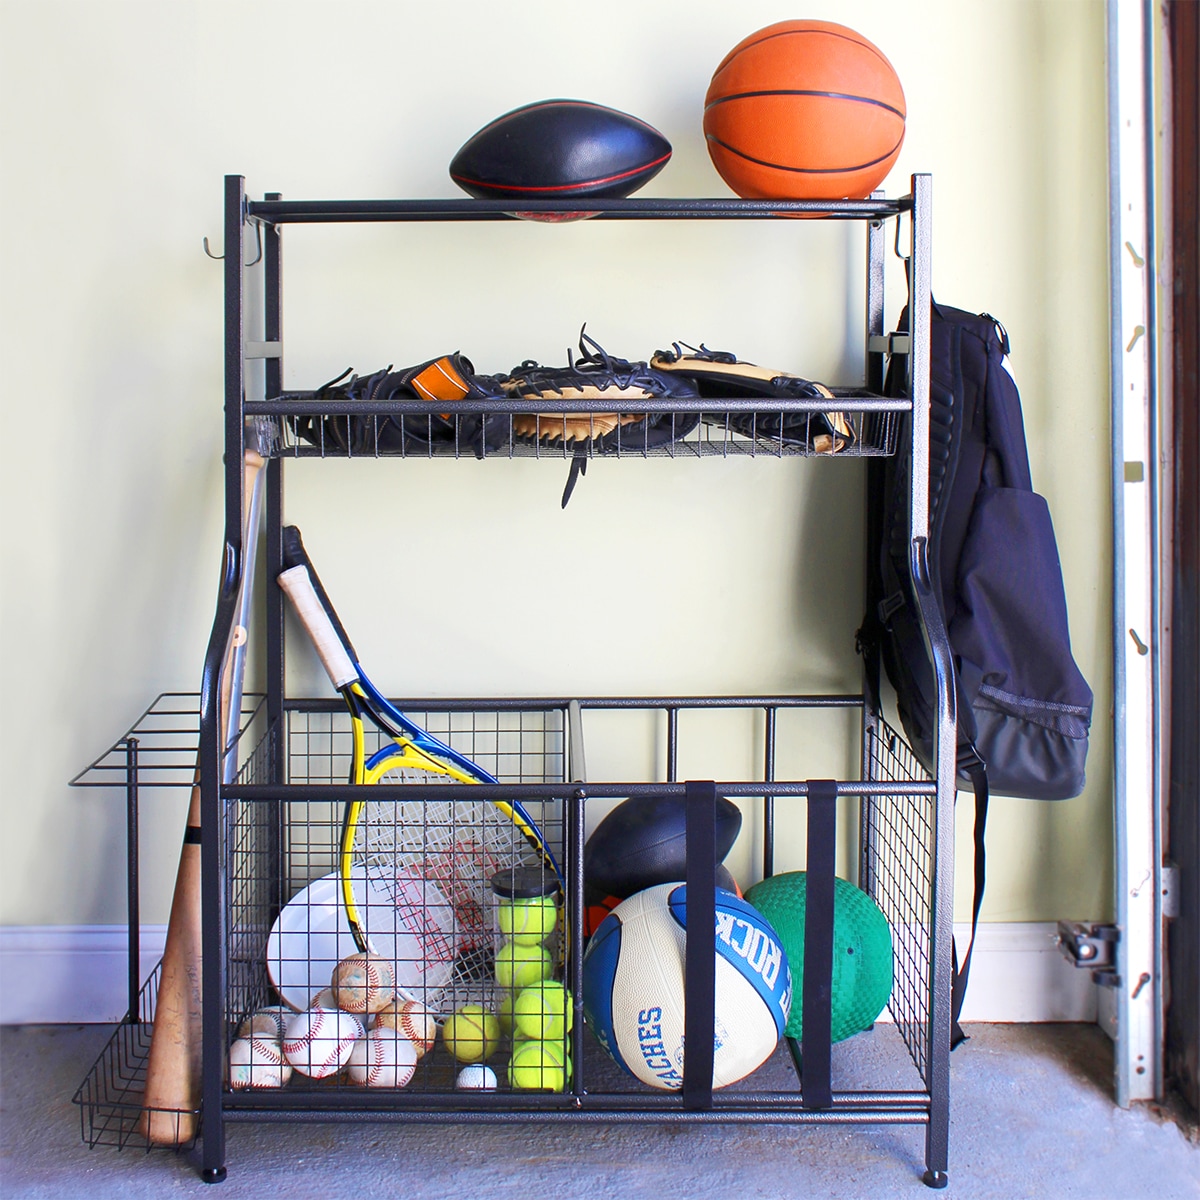 Dumbbell Rack, Sports Equipment Storage Organizer with Wheels